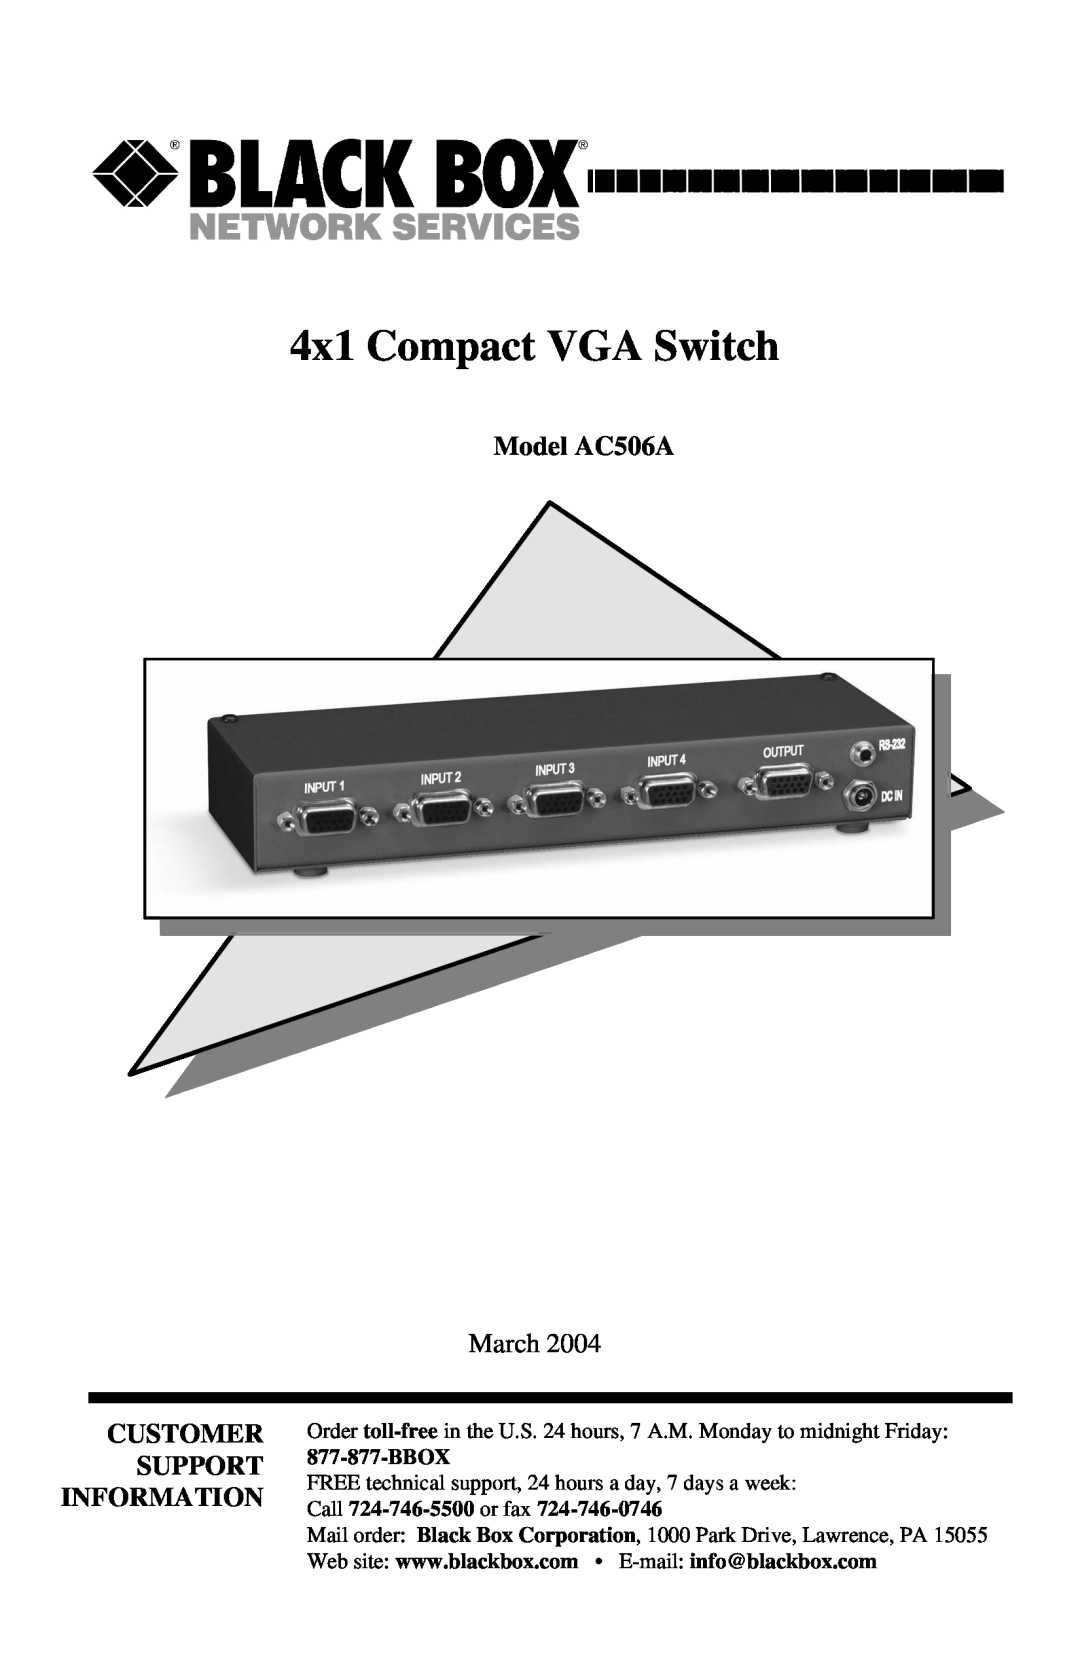 Black Box manual 4x1 Compact VGA Switch, Model AC506A, Customer Support Information, Bbox 